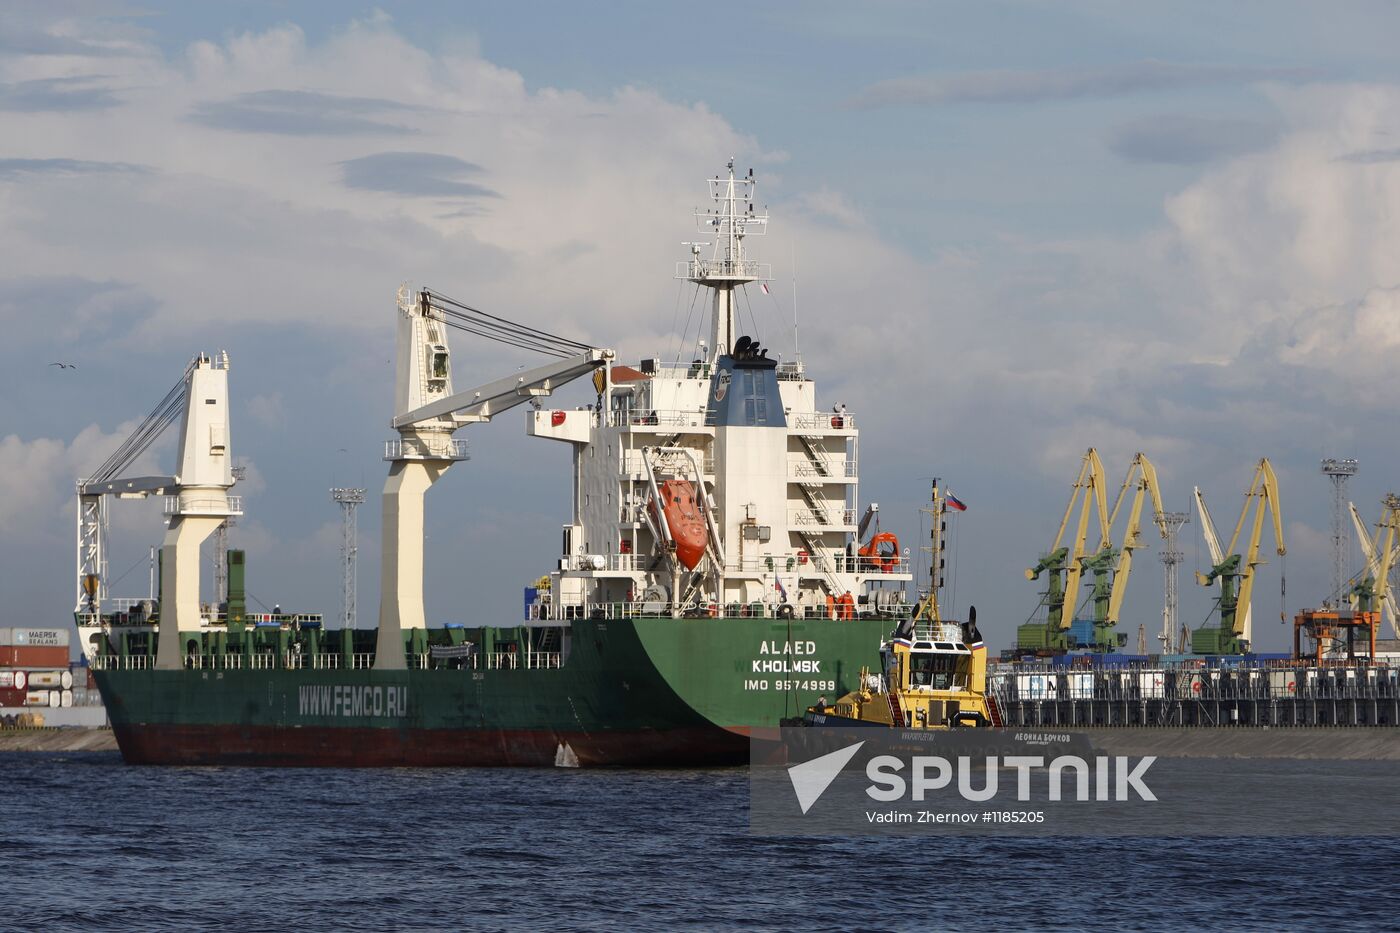 Ship "Alaed" arrives in St.Petersburg